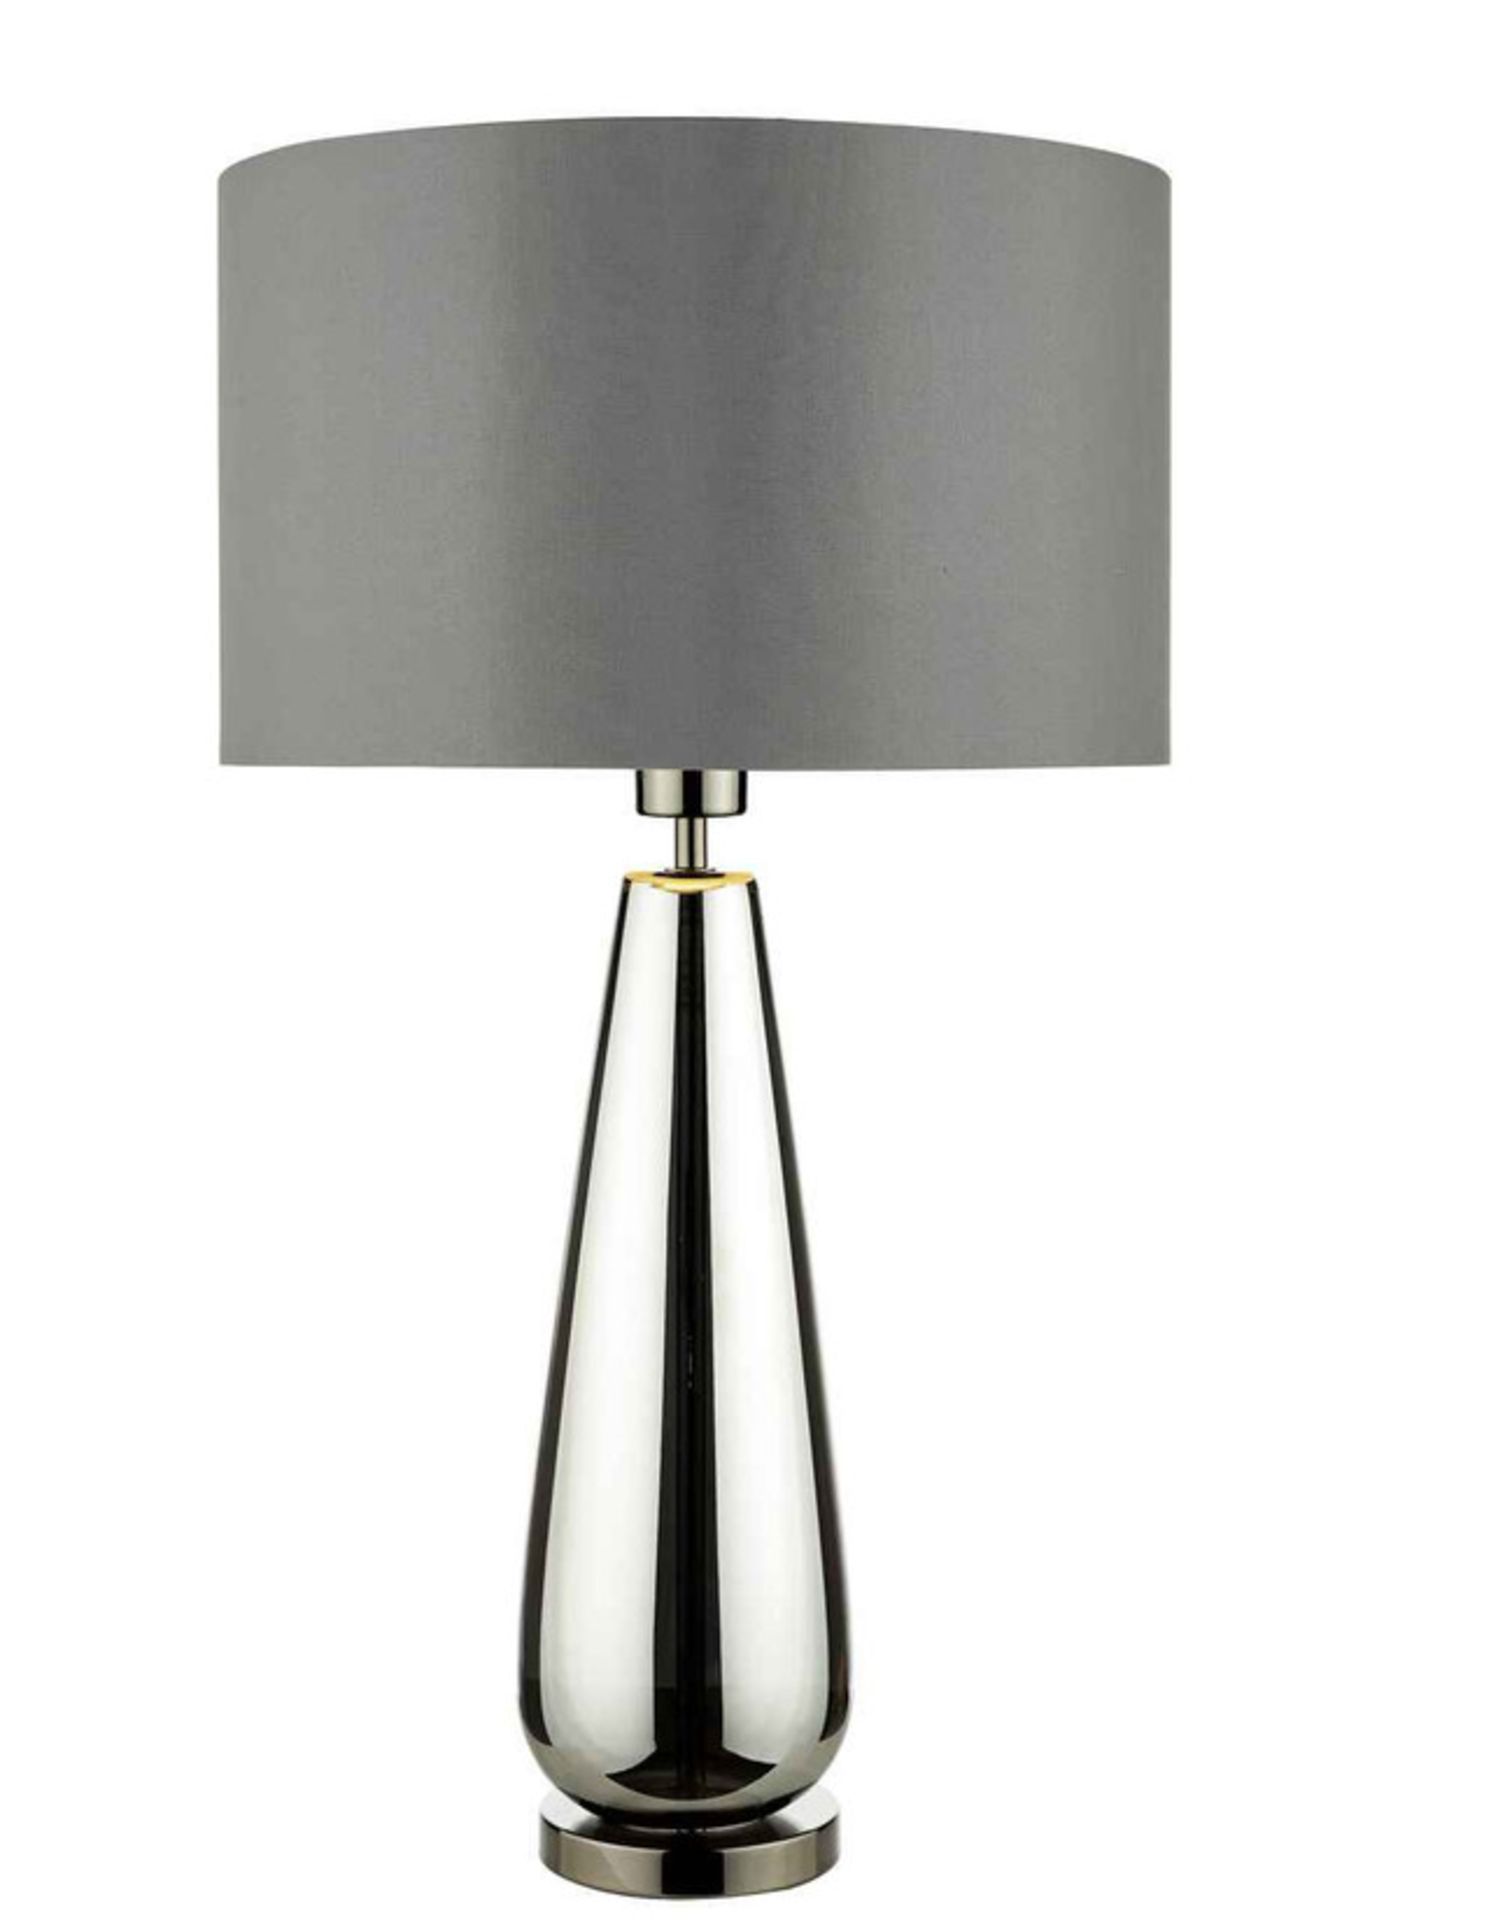 Dar Lighting Pablo Black Chrome Base with Smoked Grey Shade Table Lamp RRP £142.00 - ROW9